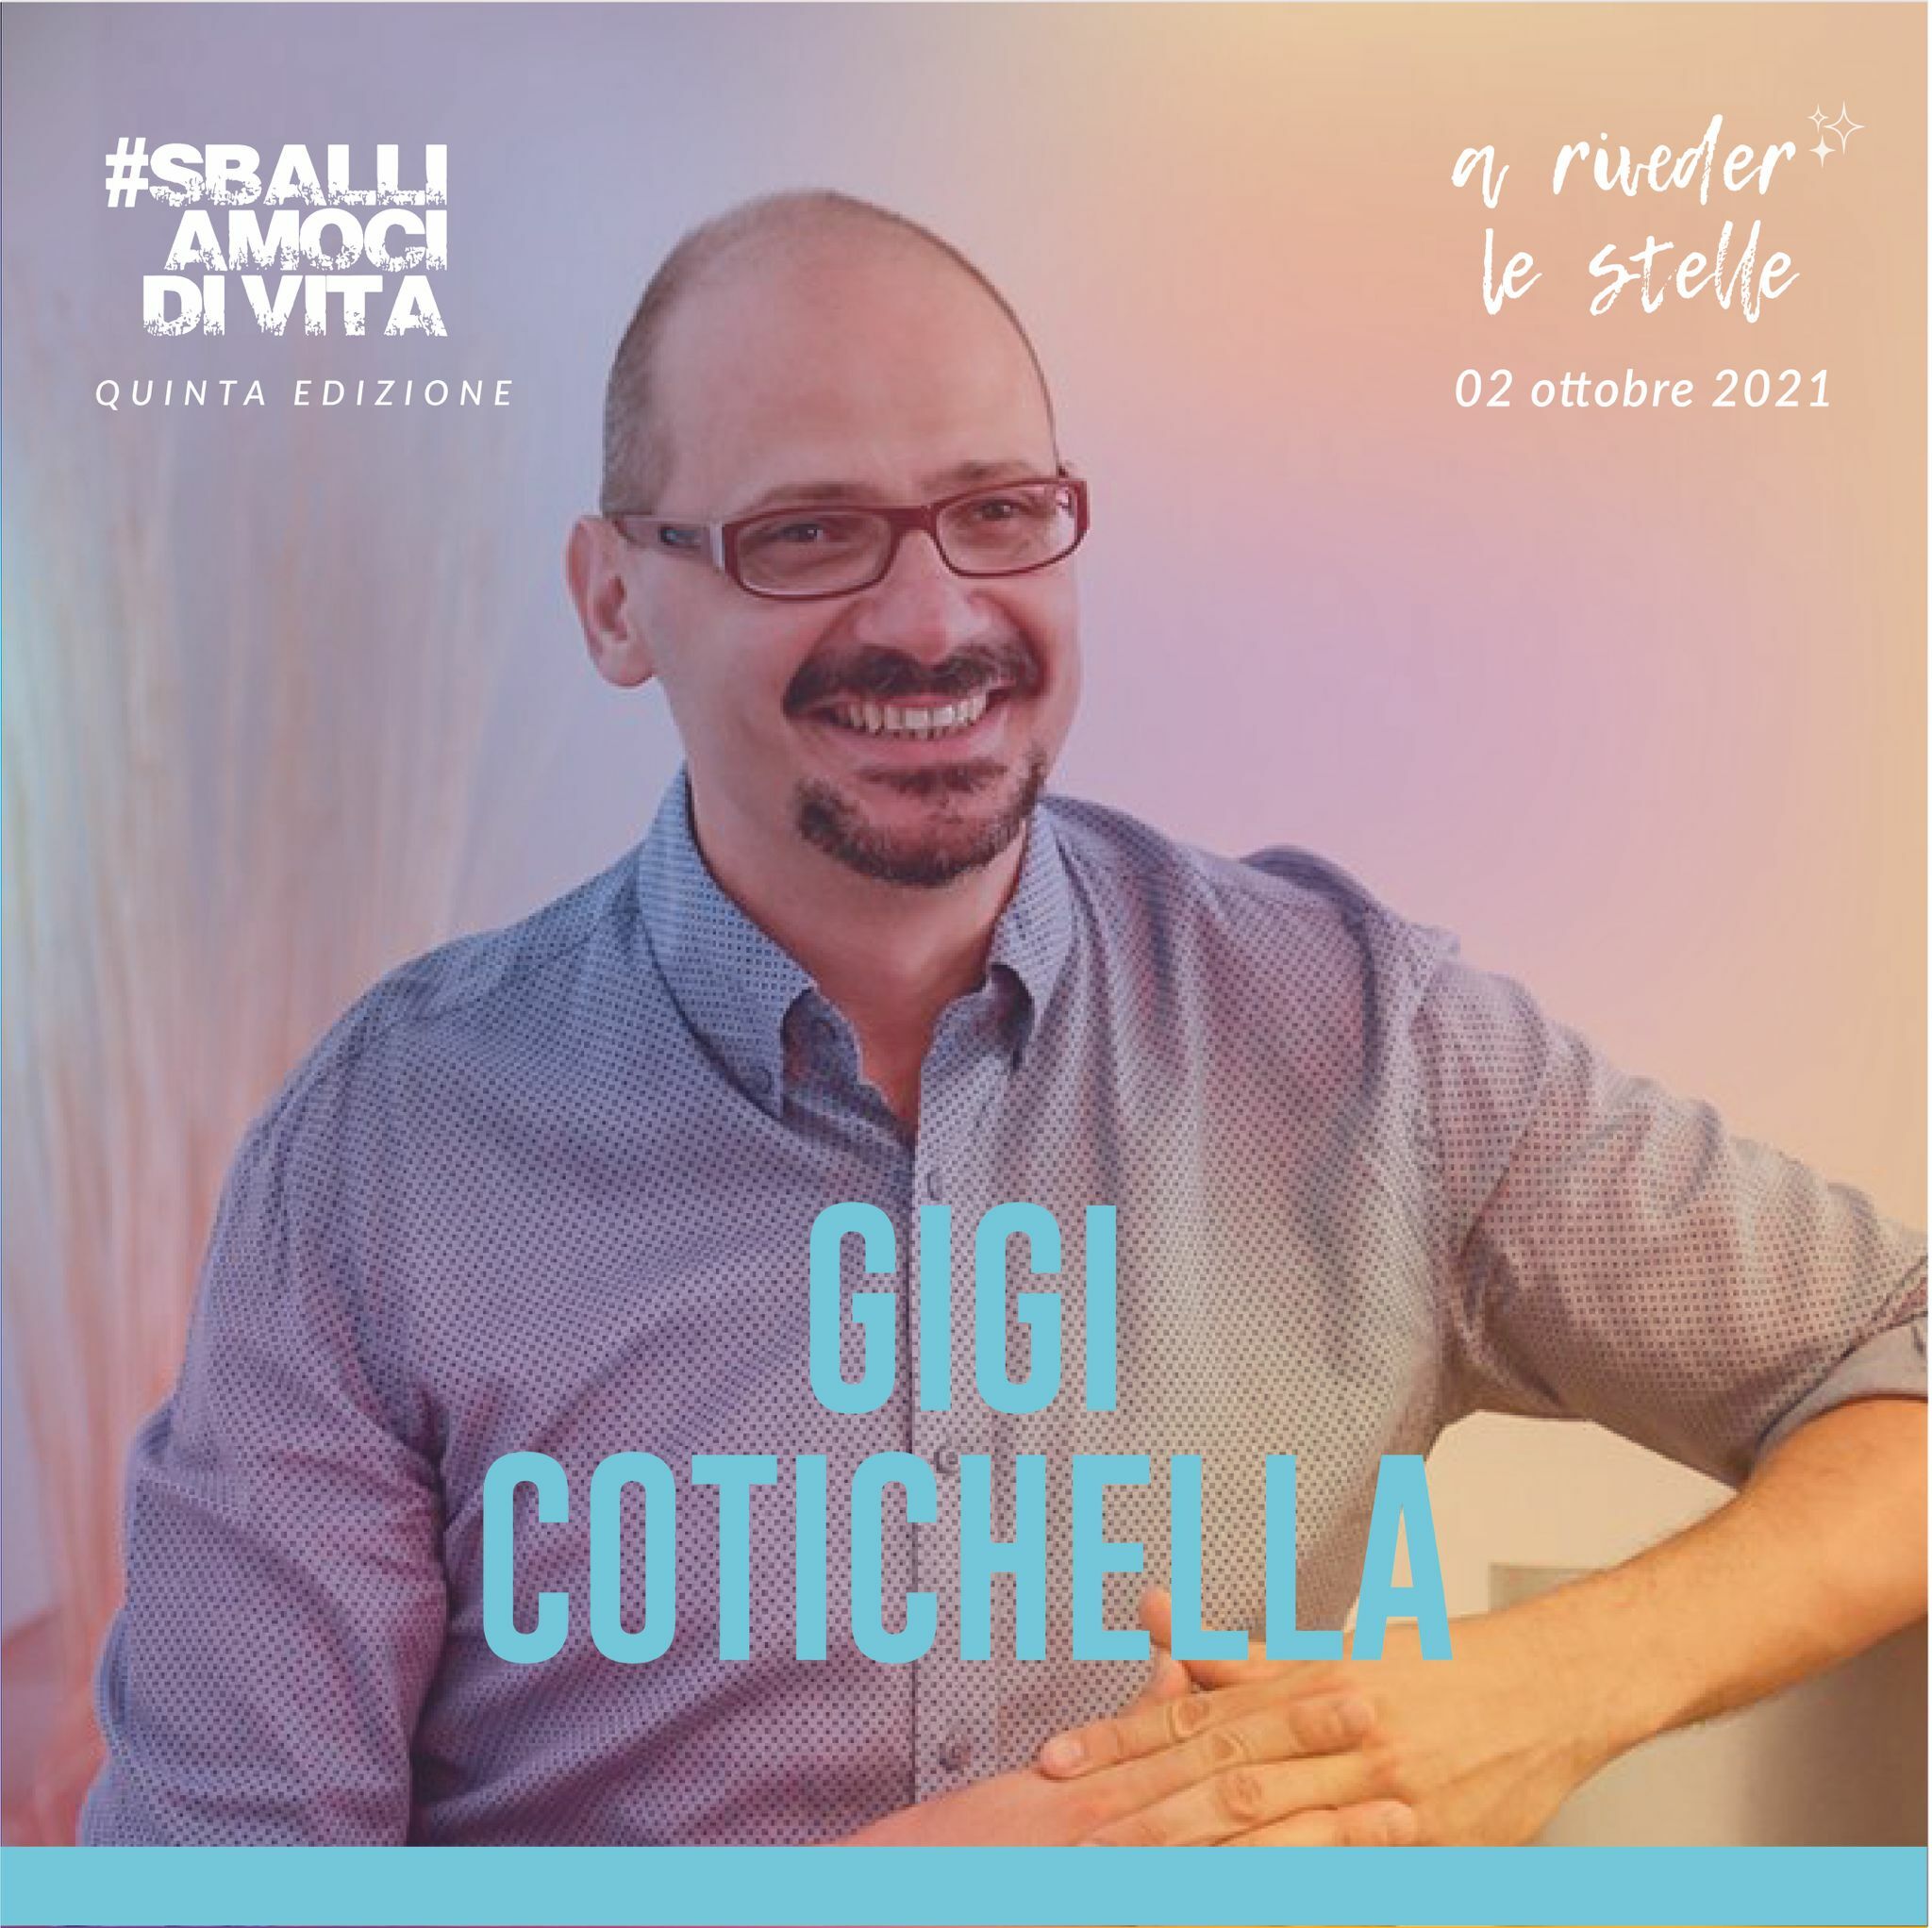 Gigi Cotichella